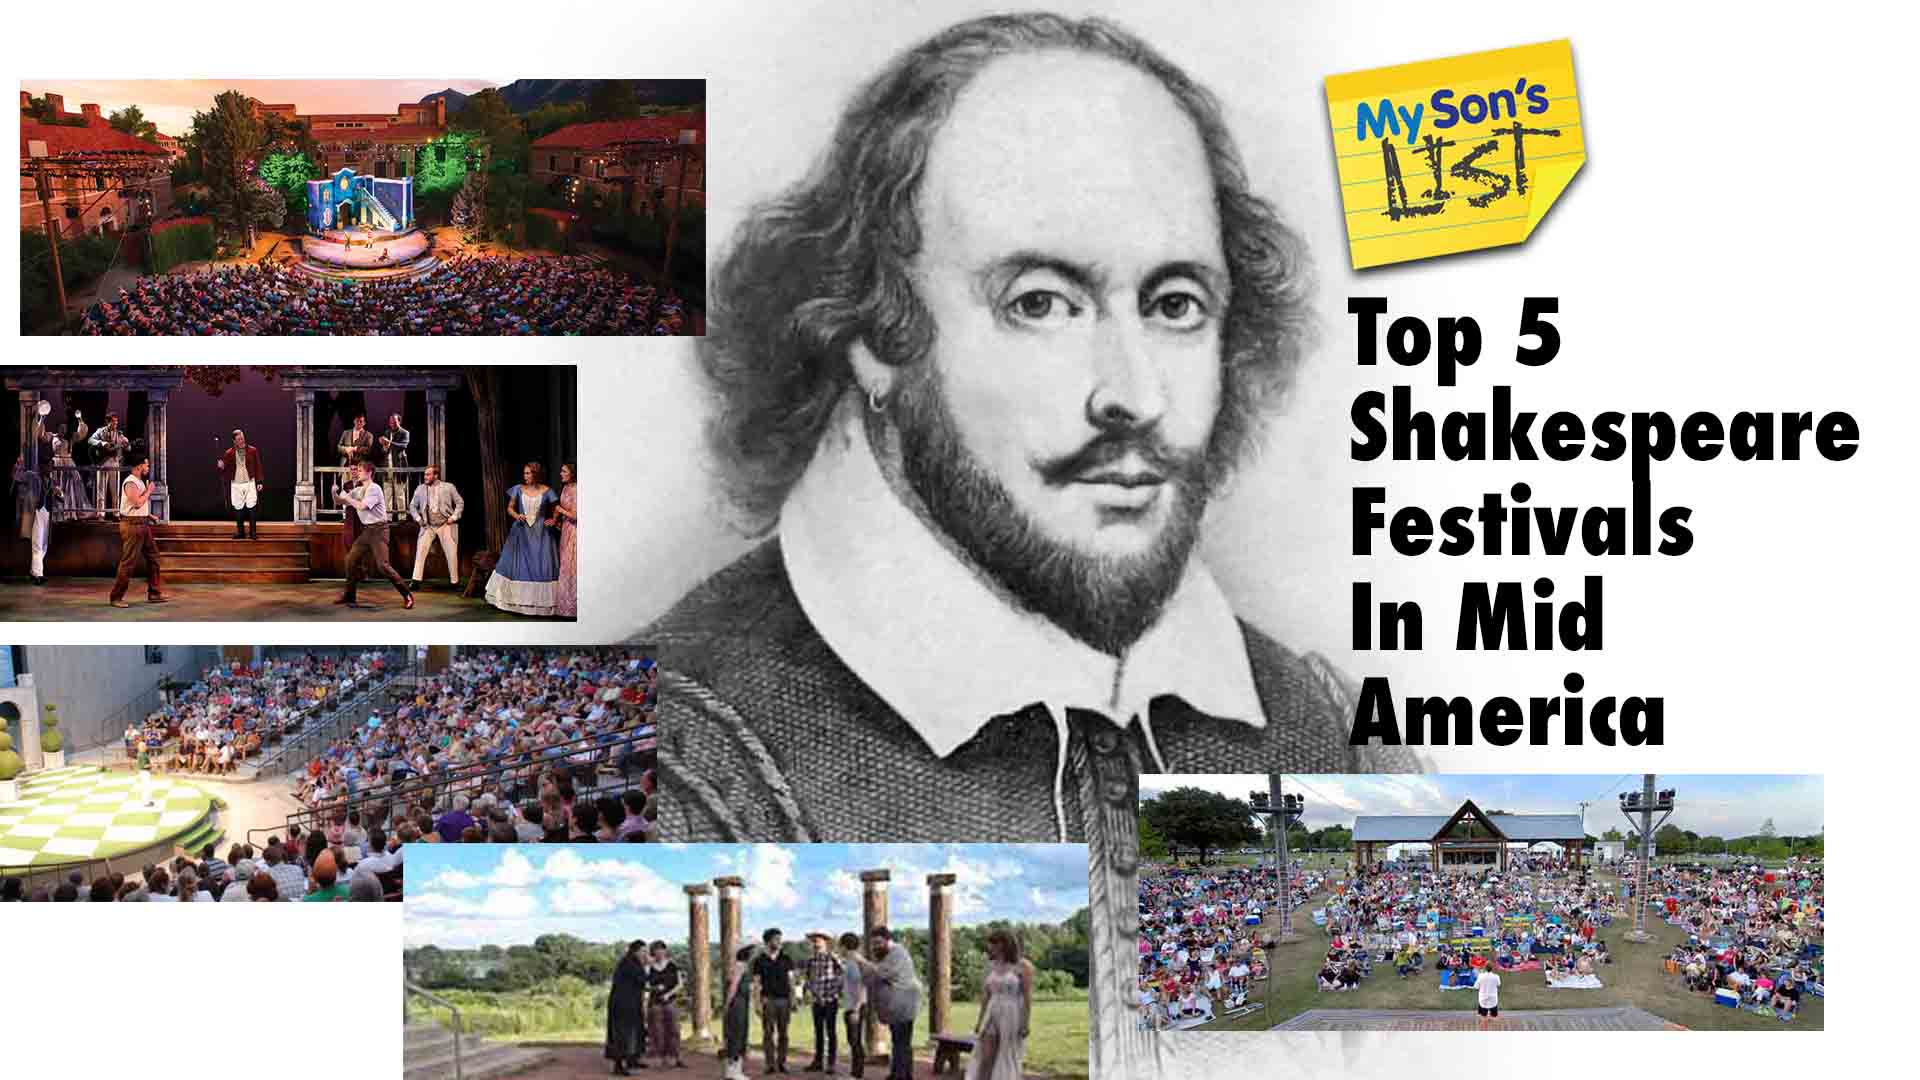 Top 5 Shakespeare Festivals In Mid America